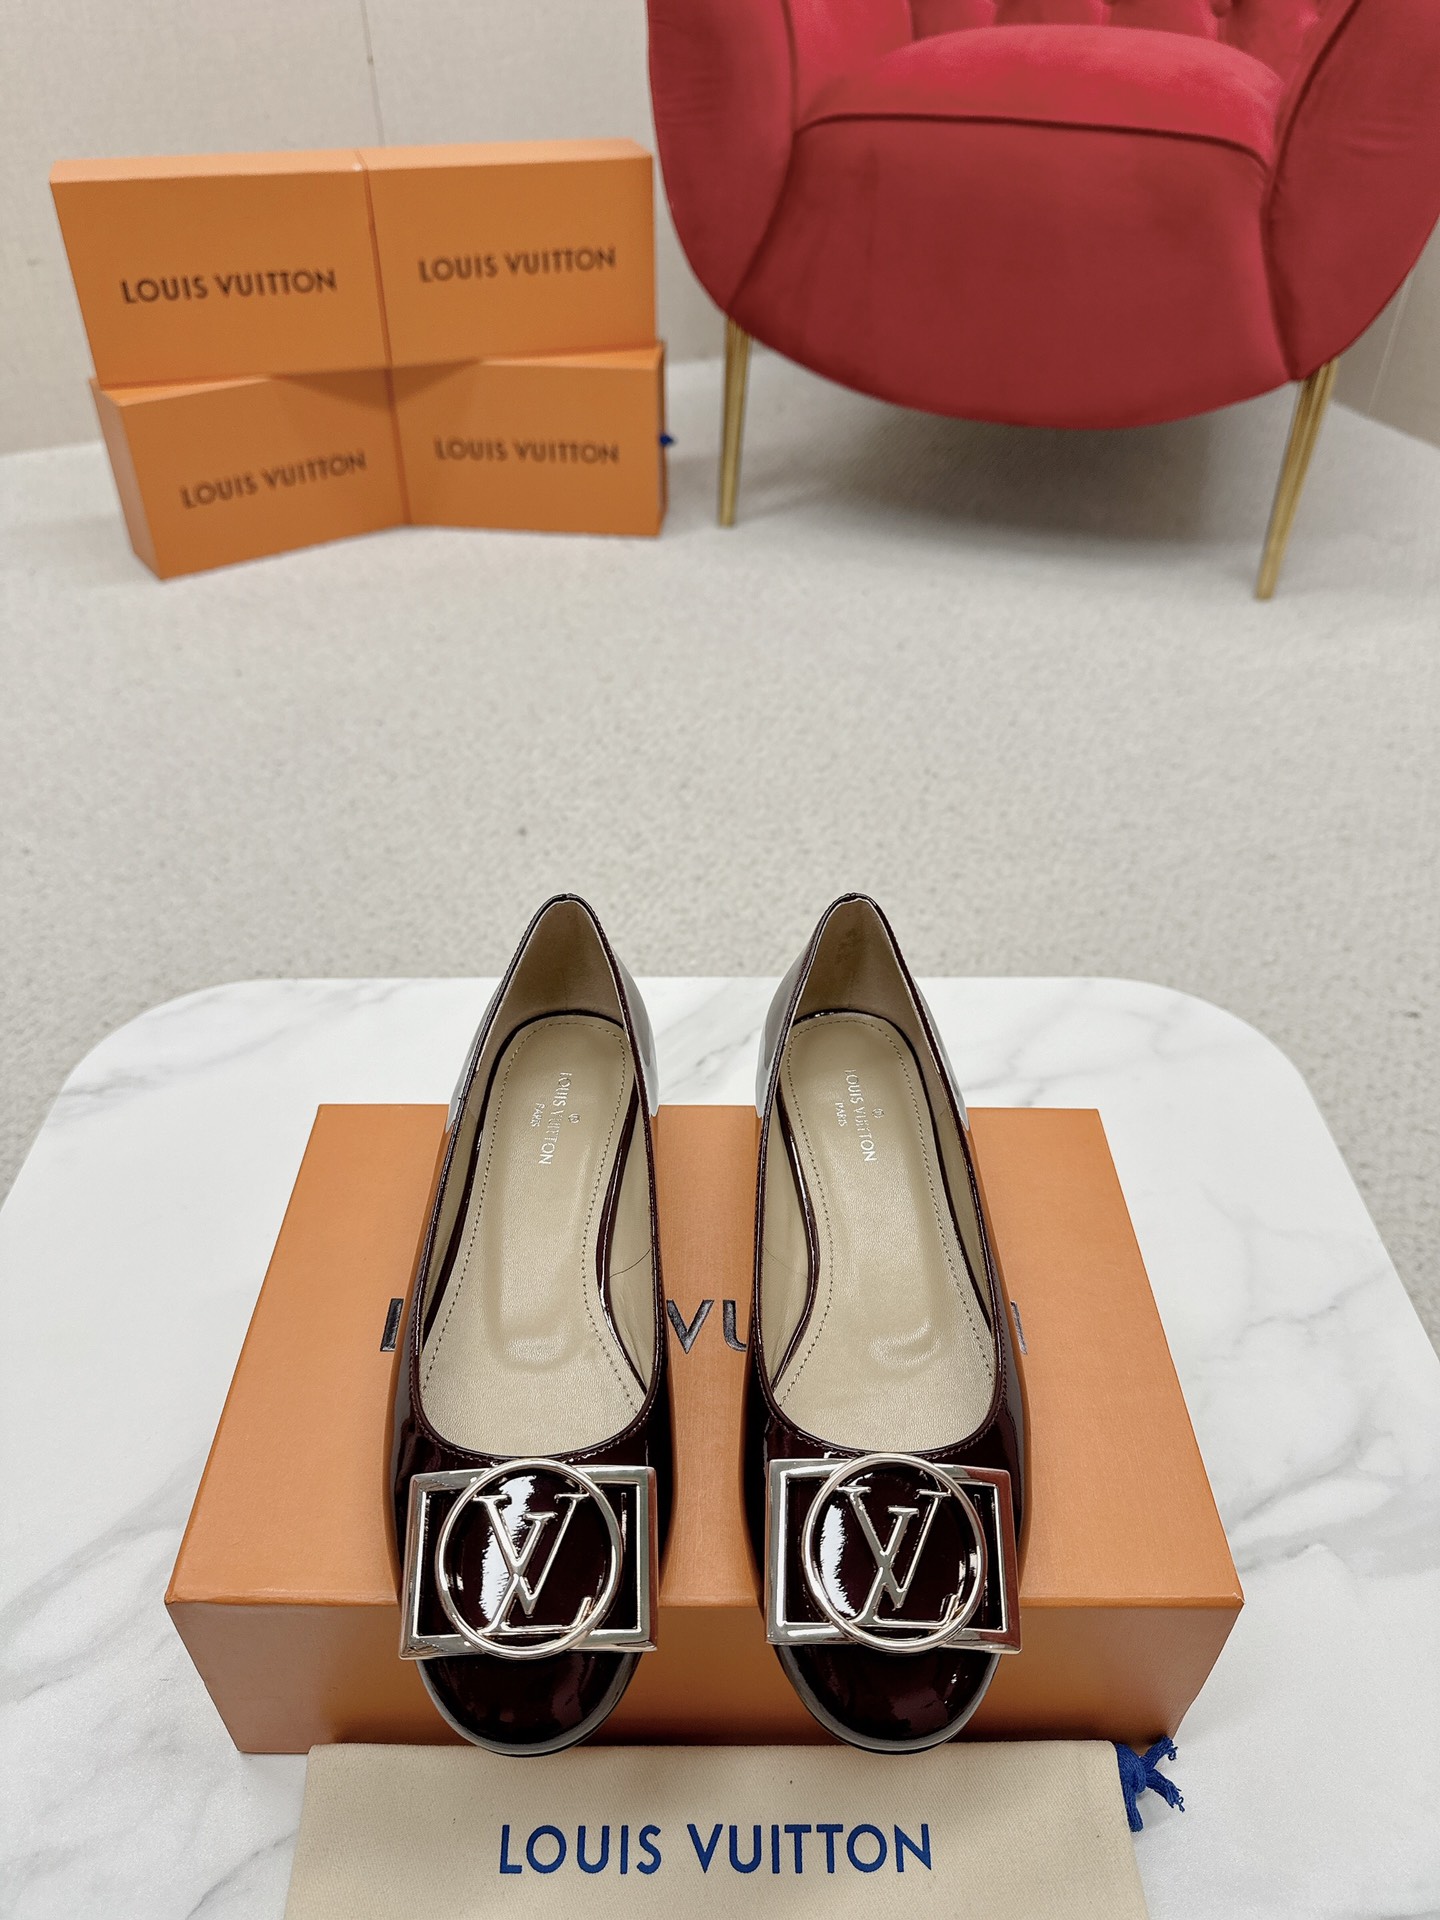 Louis Vuitton High Heel Pumps Single Layer Shoes Silver Calfskin Cowhide Genuine Leather Sheepskin Fashion